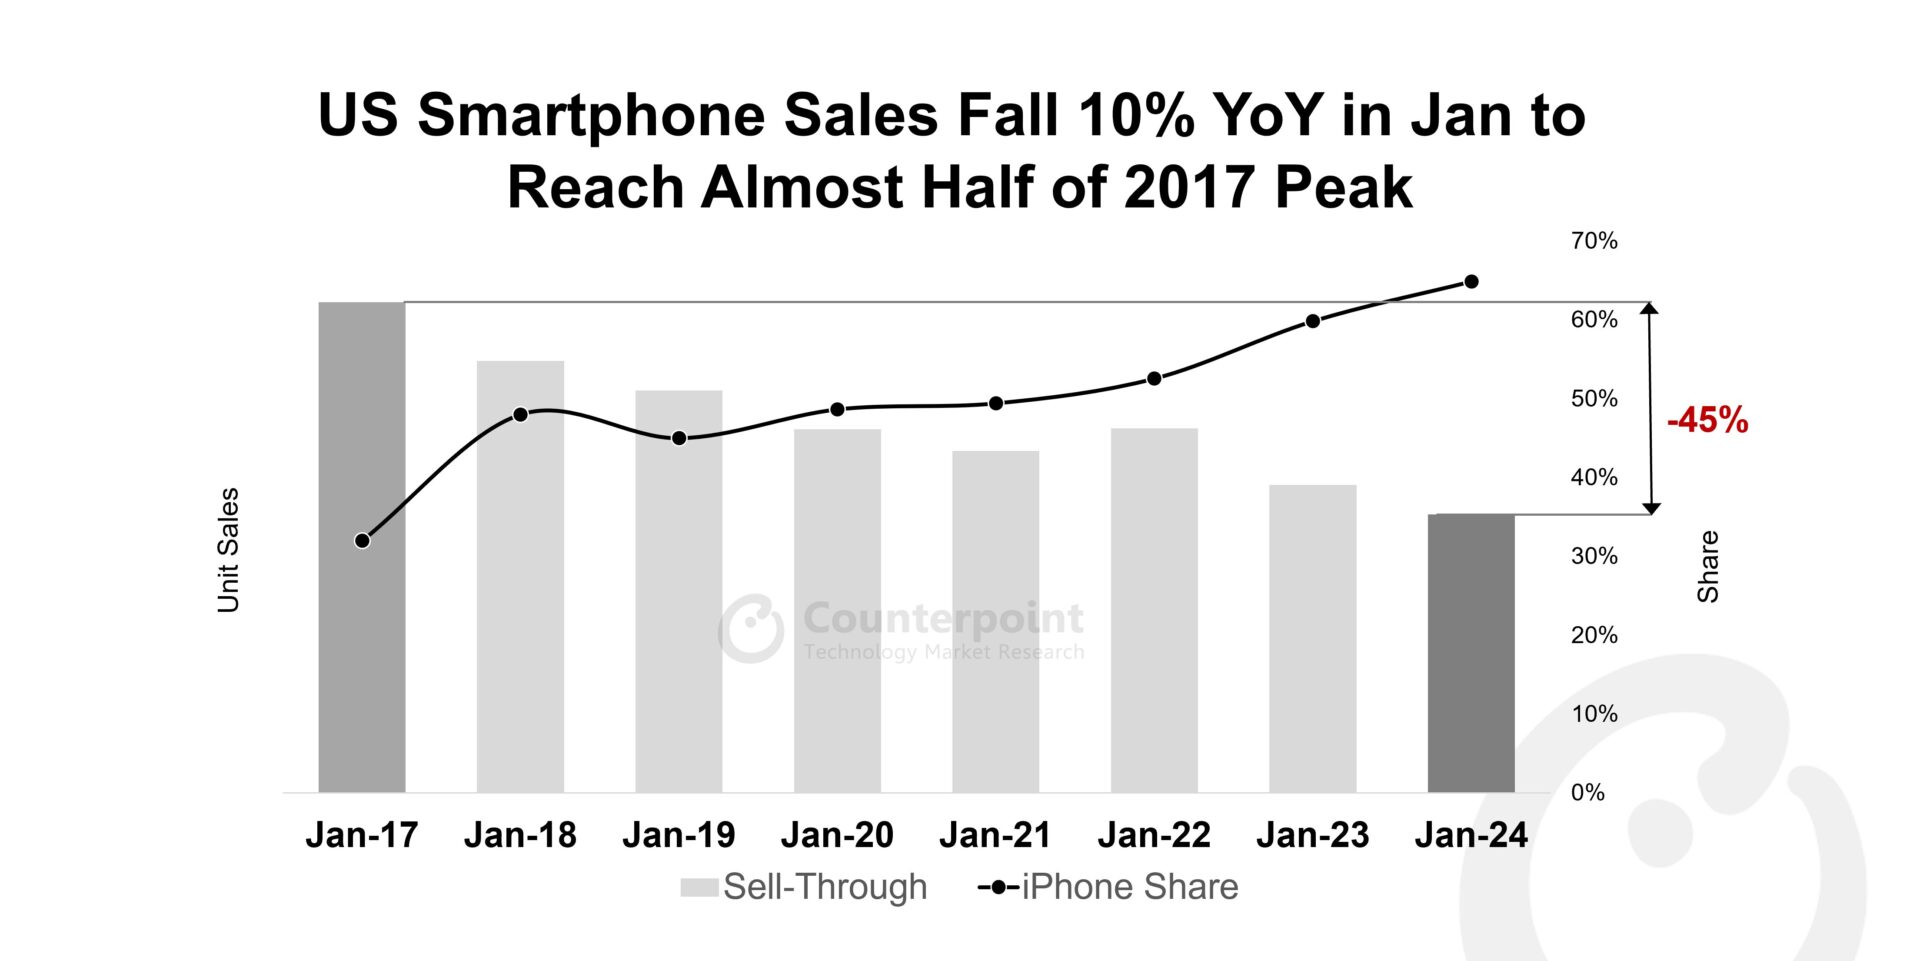 US Smartphone Sales Fall 10% YoY in Jan to Reach Almost Half of 2017 Peak